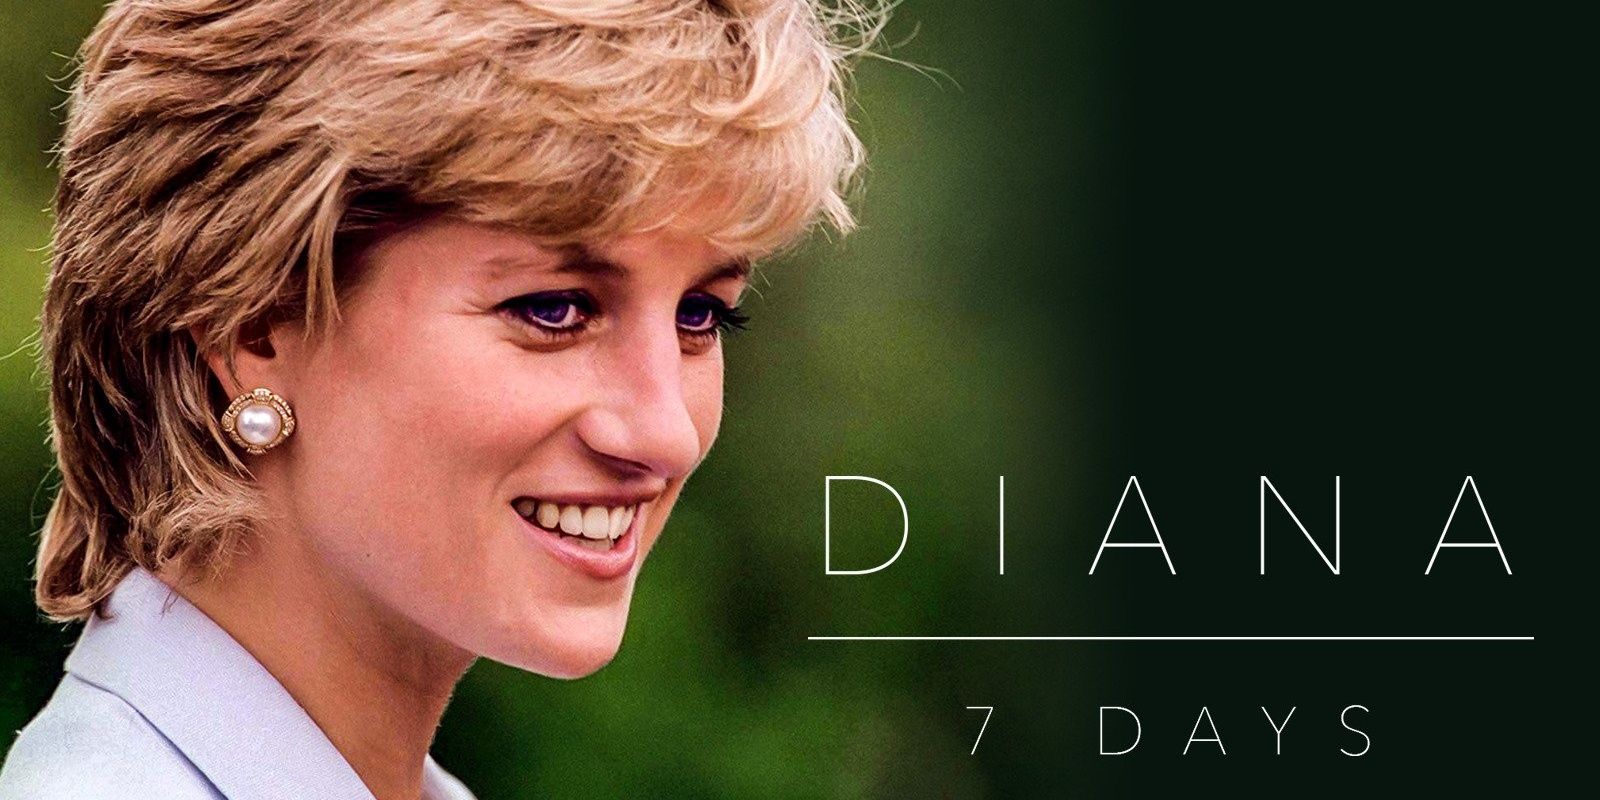 10 Best Movies Based On Princess Dianas Life Ranked By IMDb